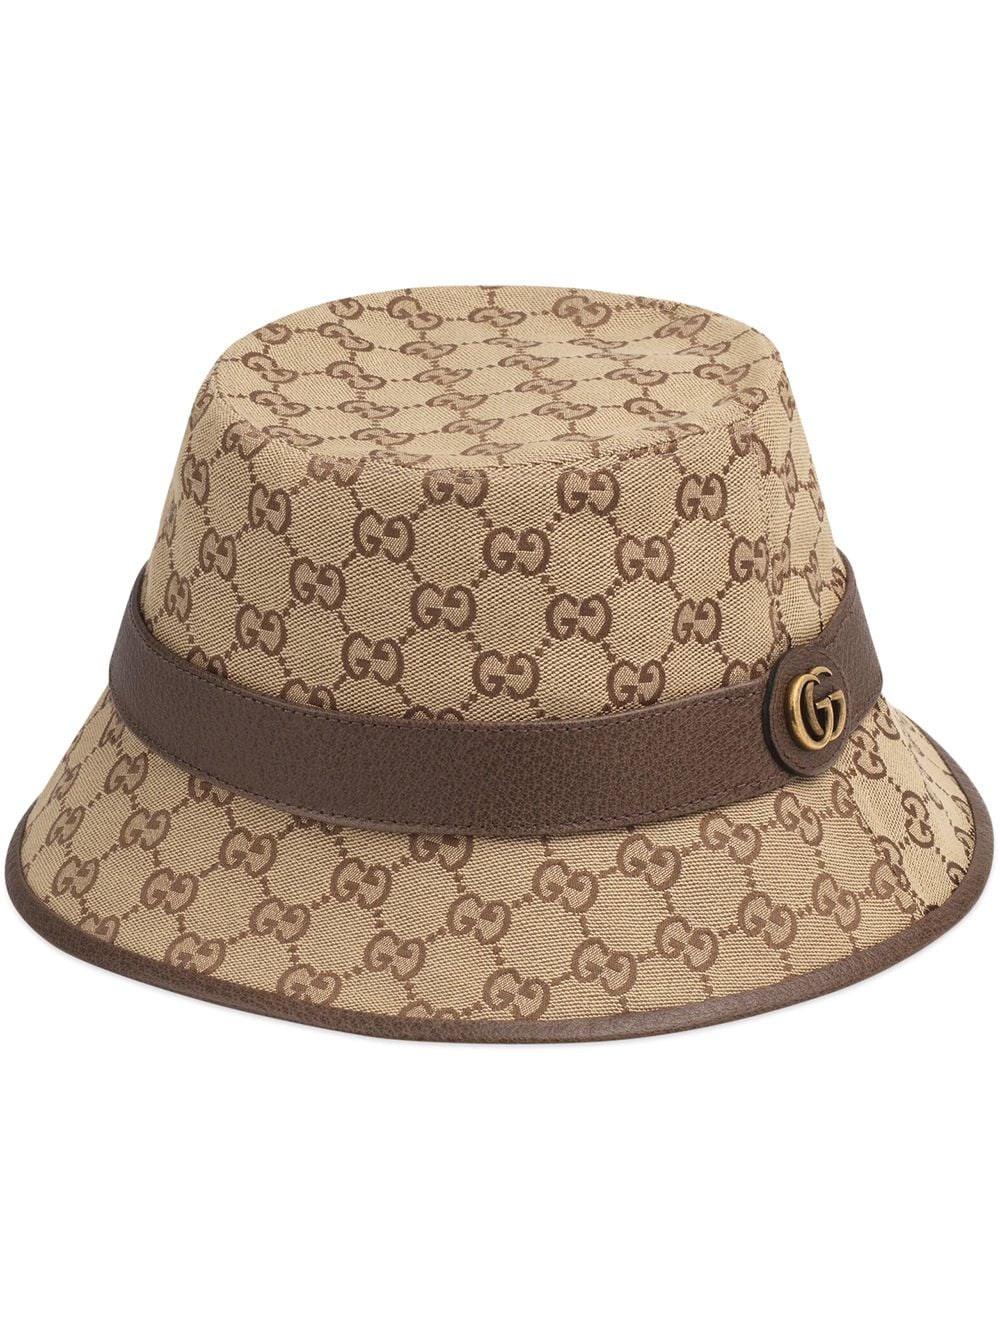 New!! Gucci Bucket Hat Size L